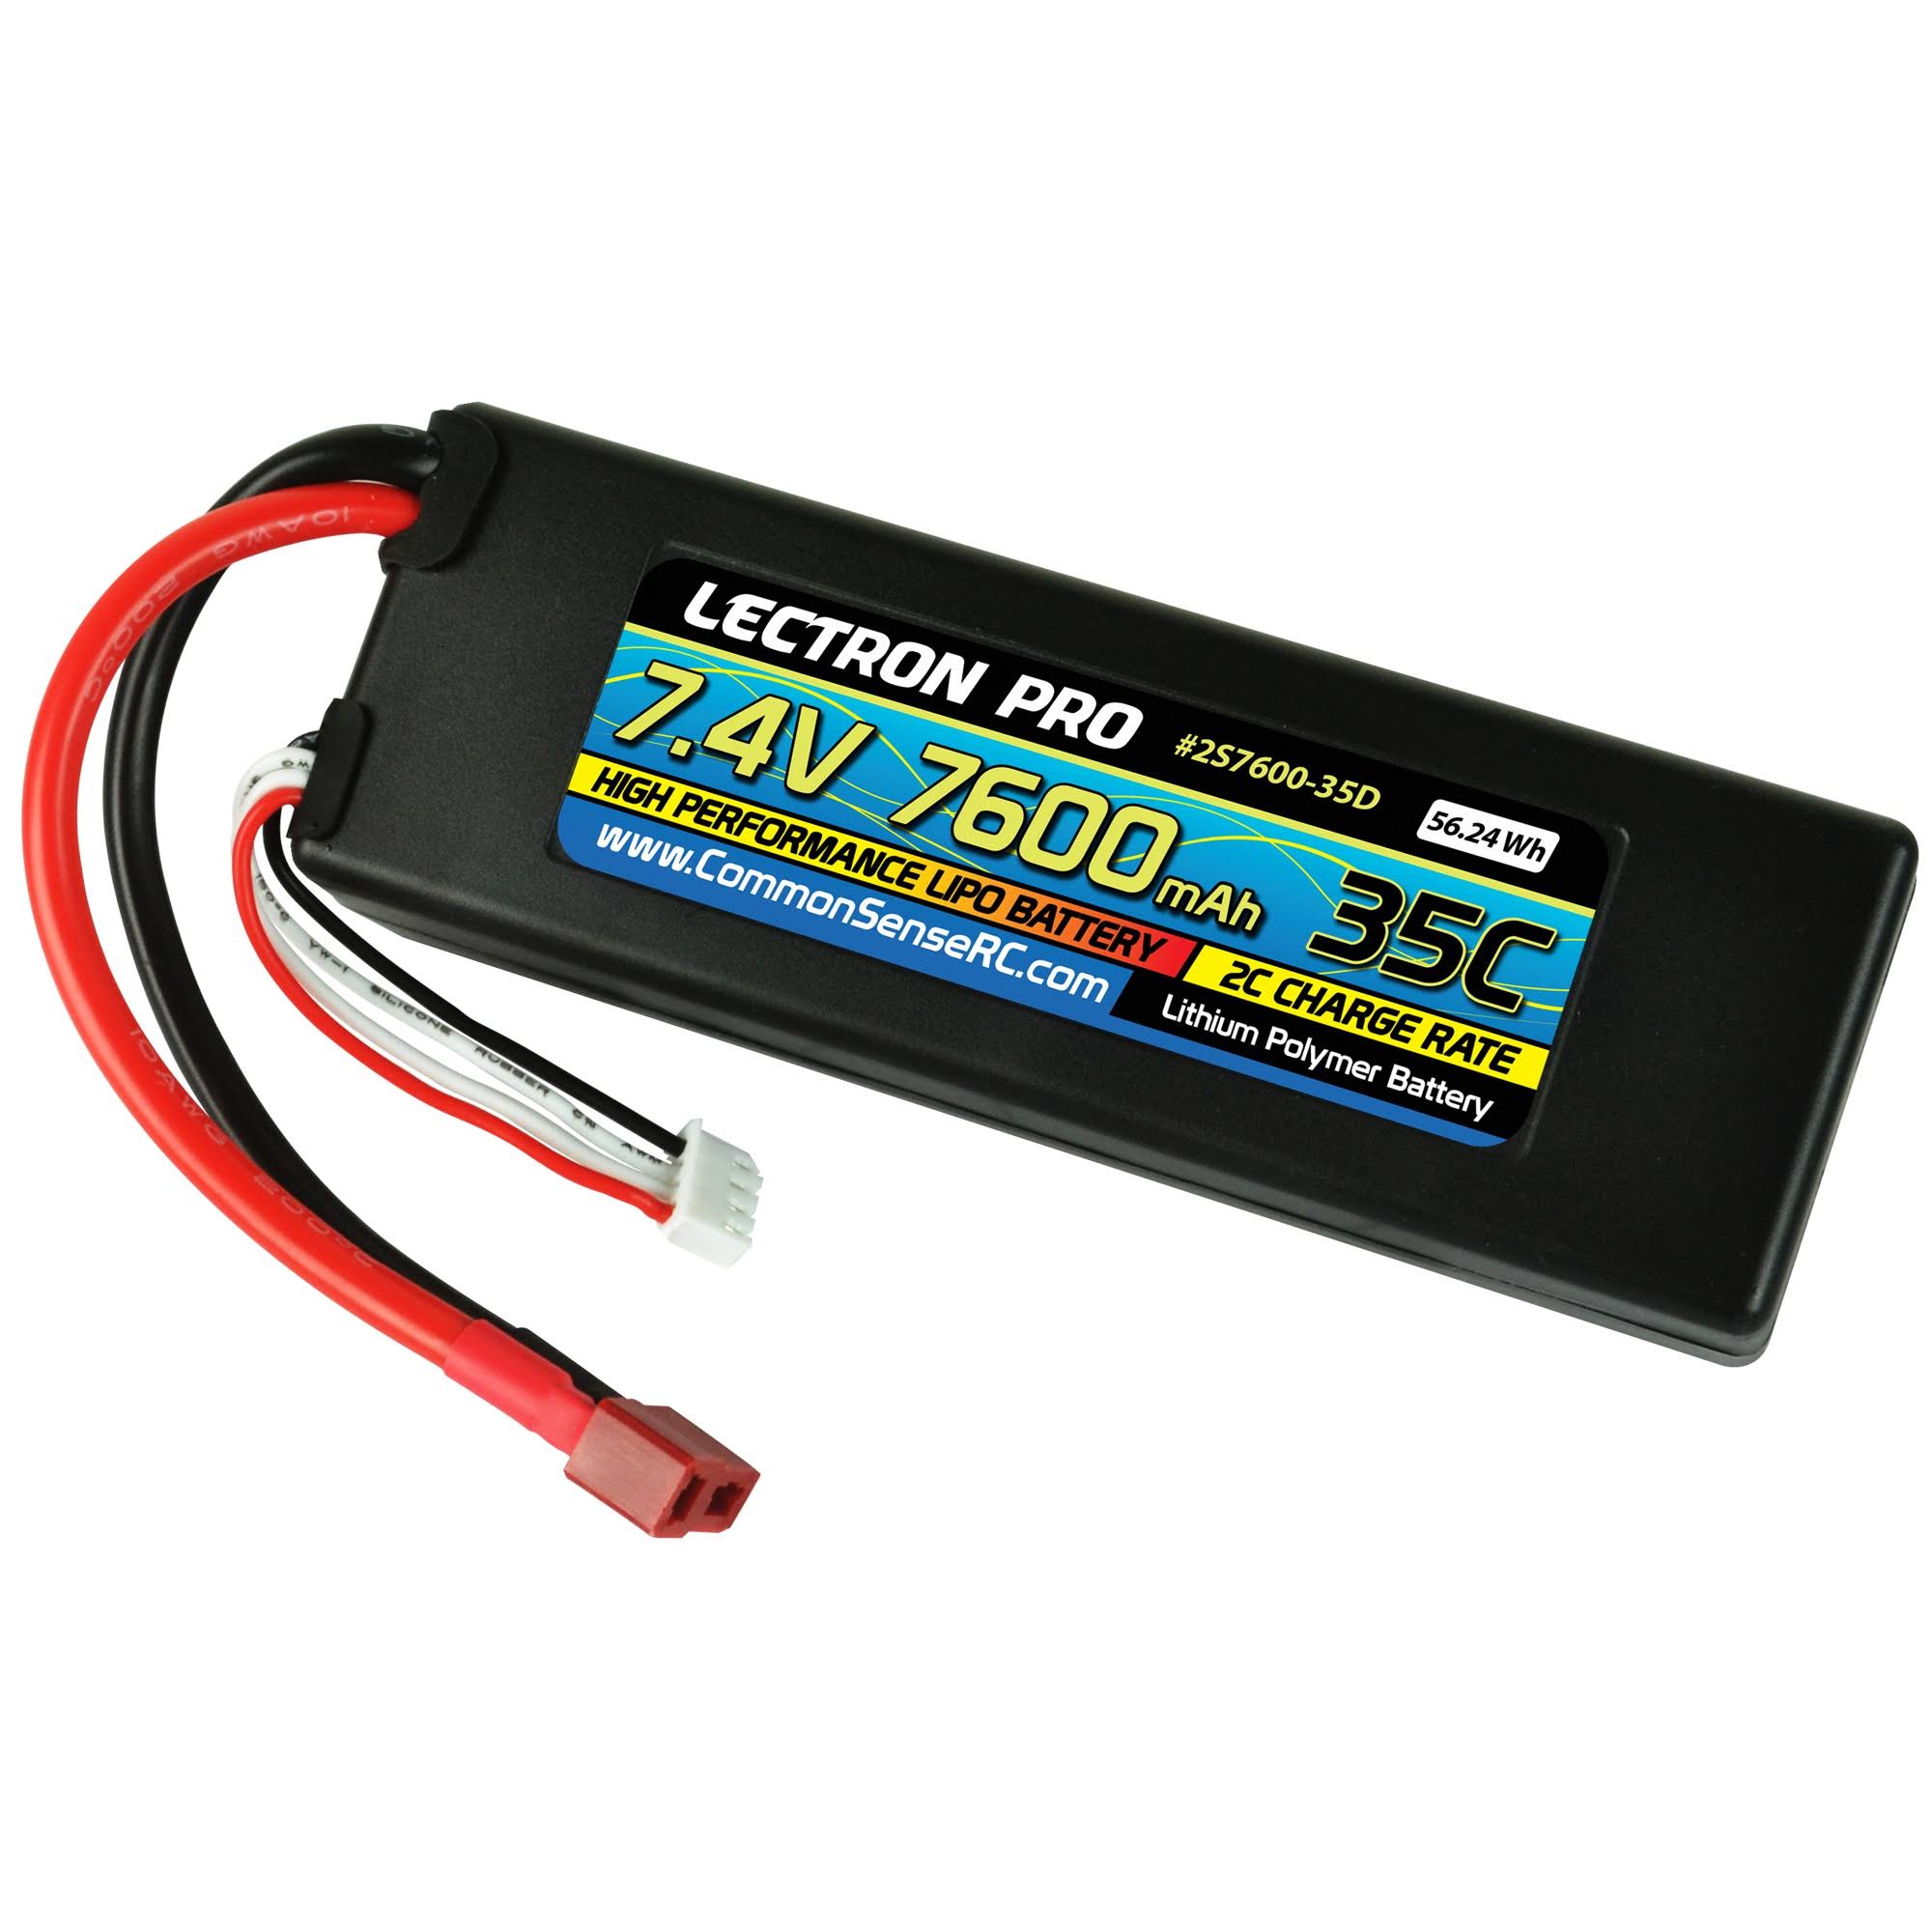 Lectron Pro 35c Lipo Battery - 7.4V, 7600mah